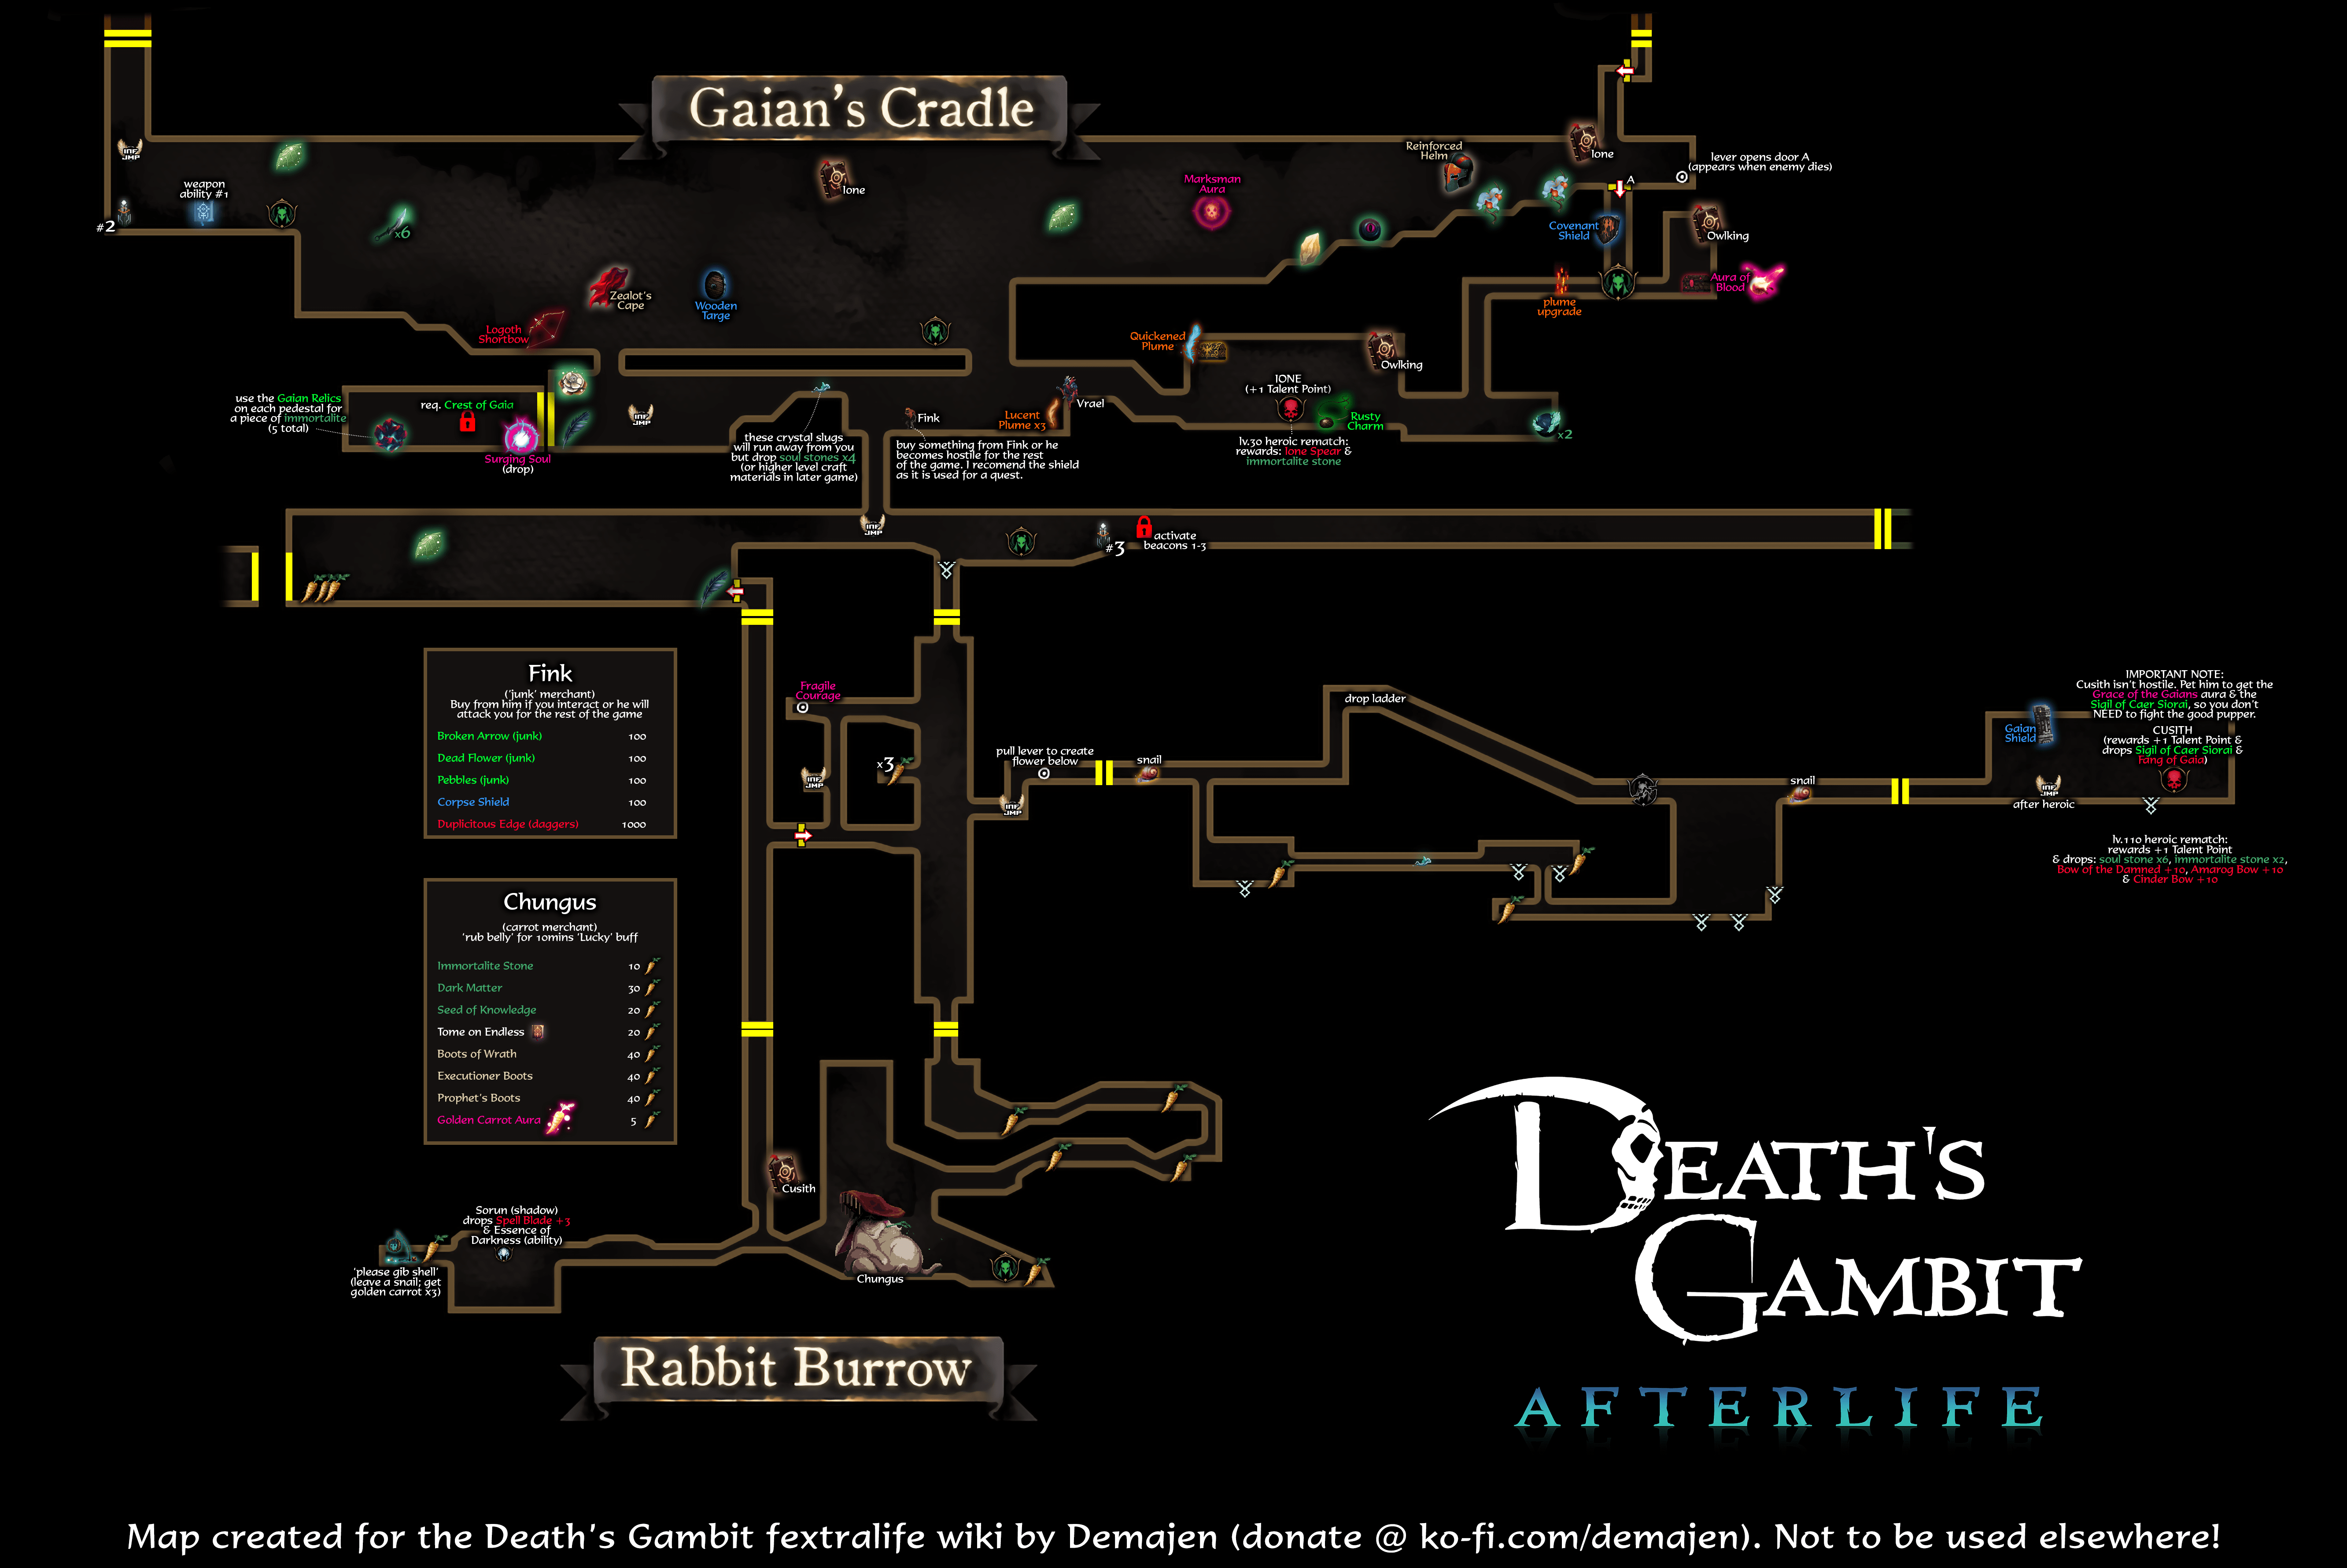 Death's Gambit 100% Walkthrough All Items Guide